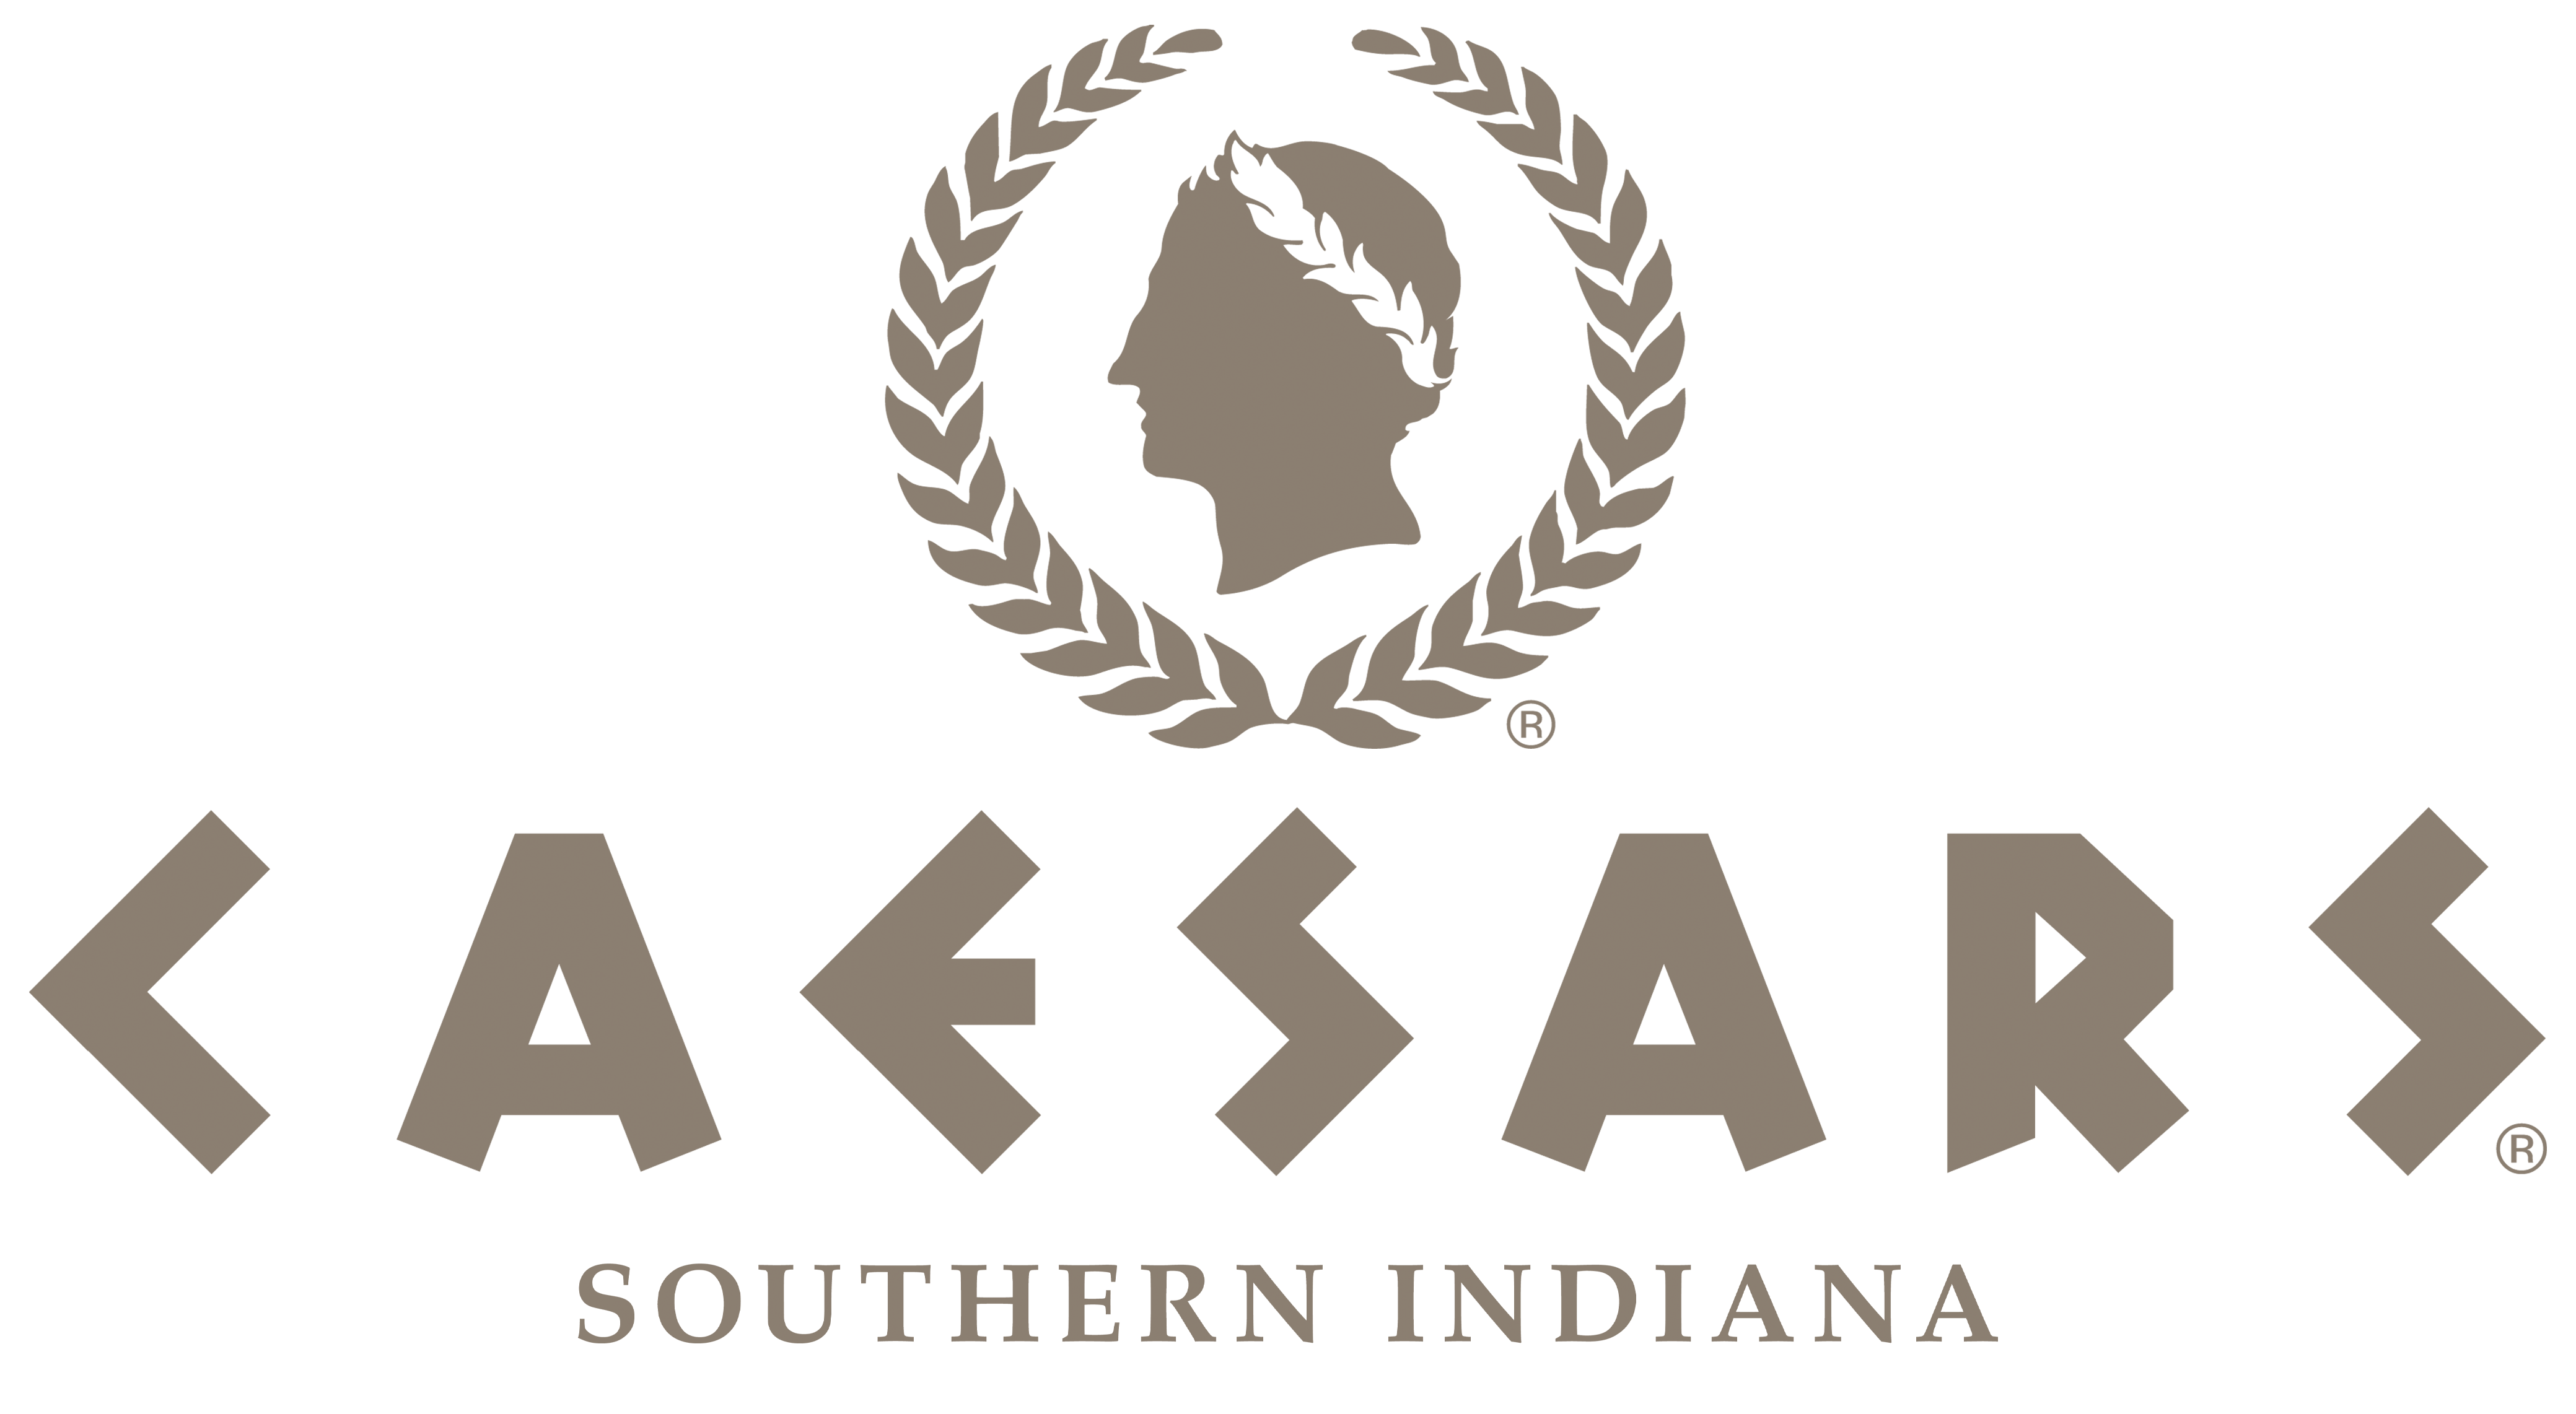 Caesars Southern Indiana